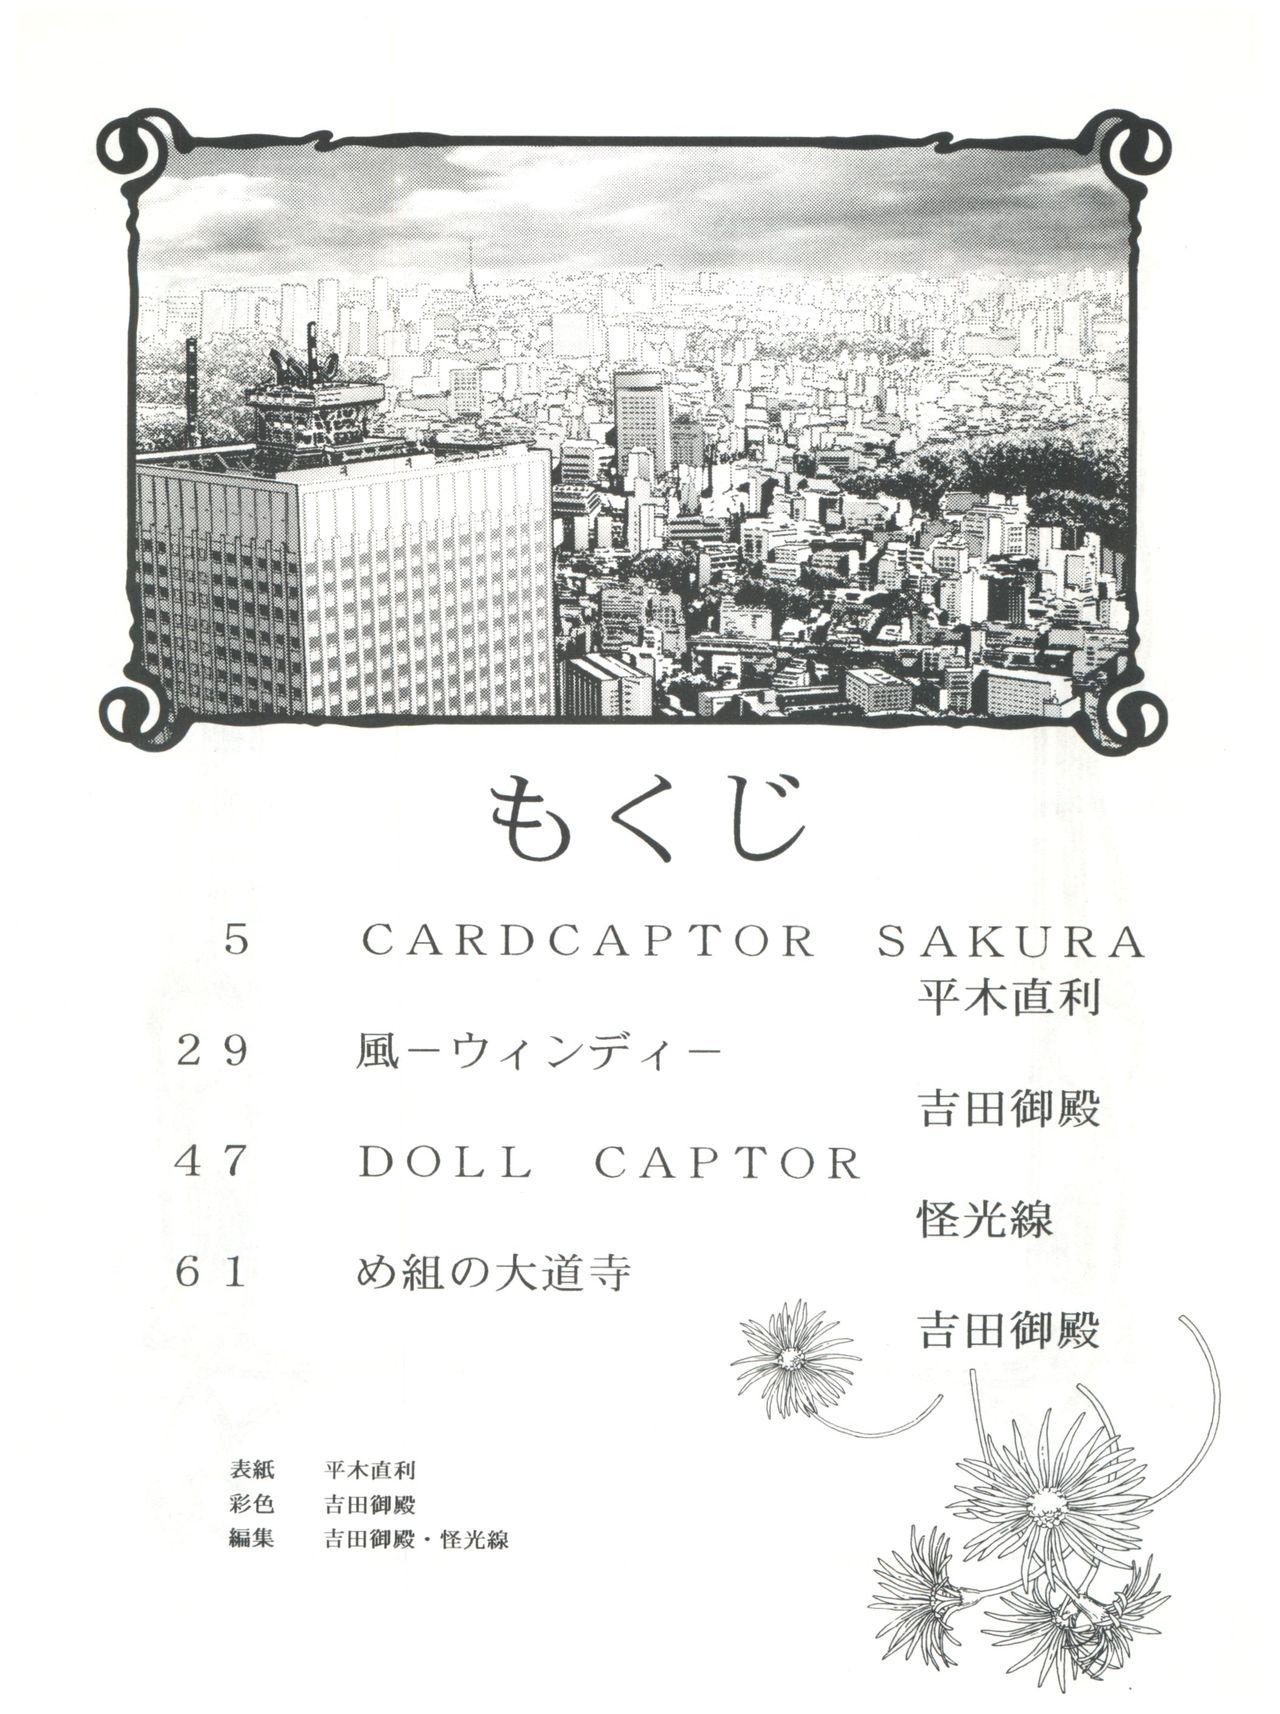 Mentaiko Card Captor Sakura 2